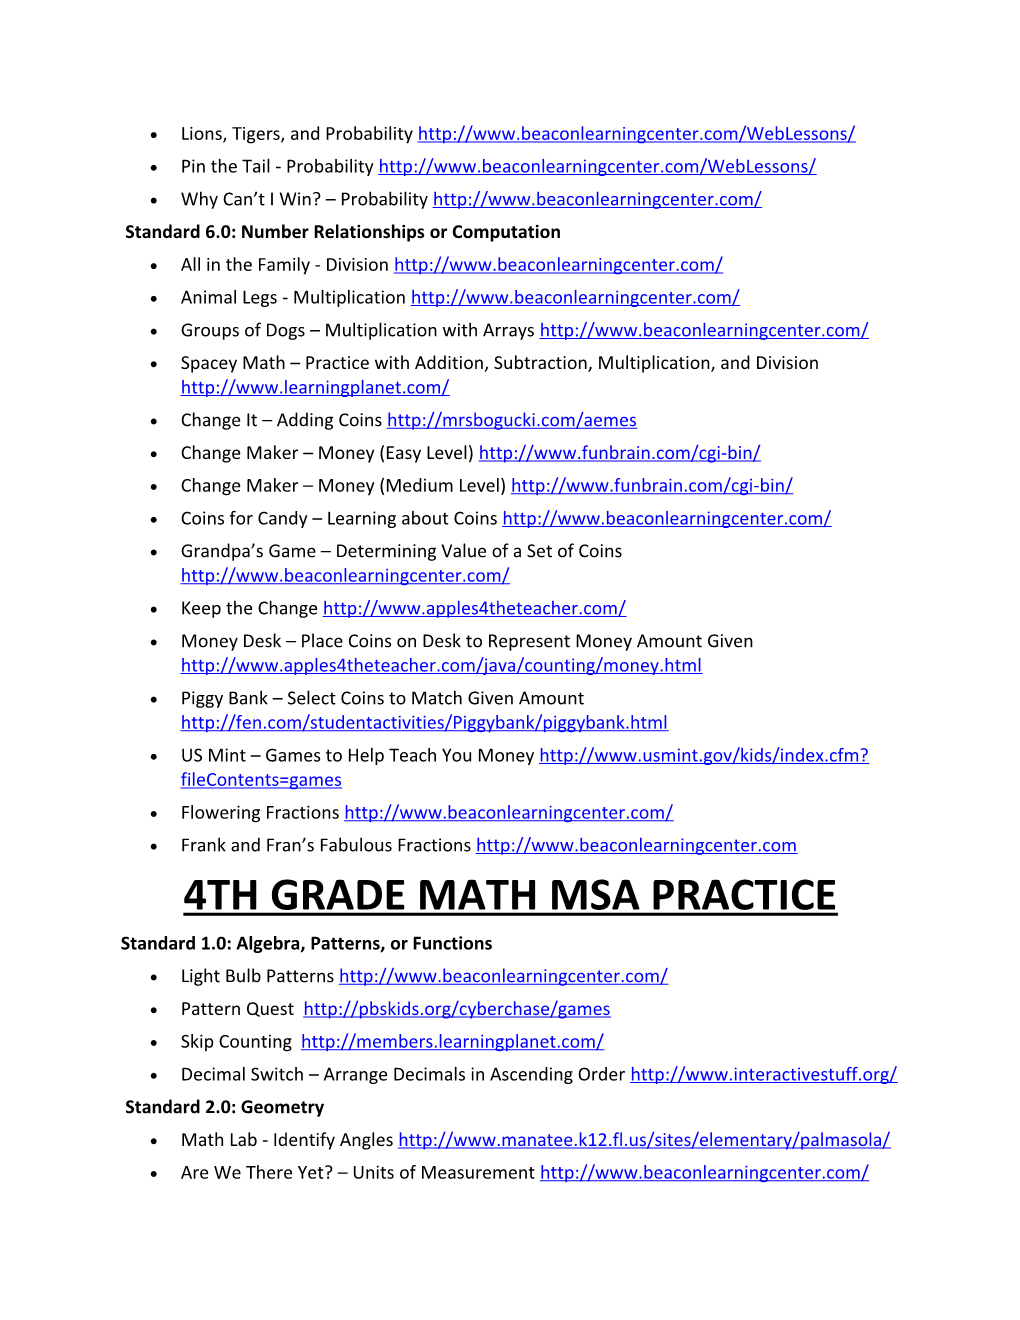 Third Grade Math Msa Practice